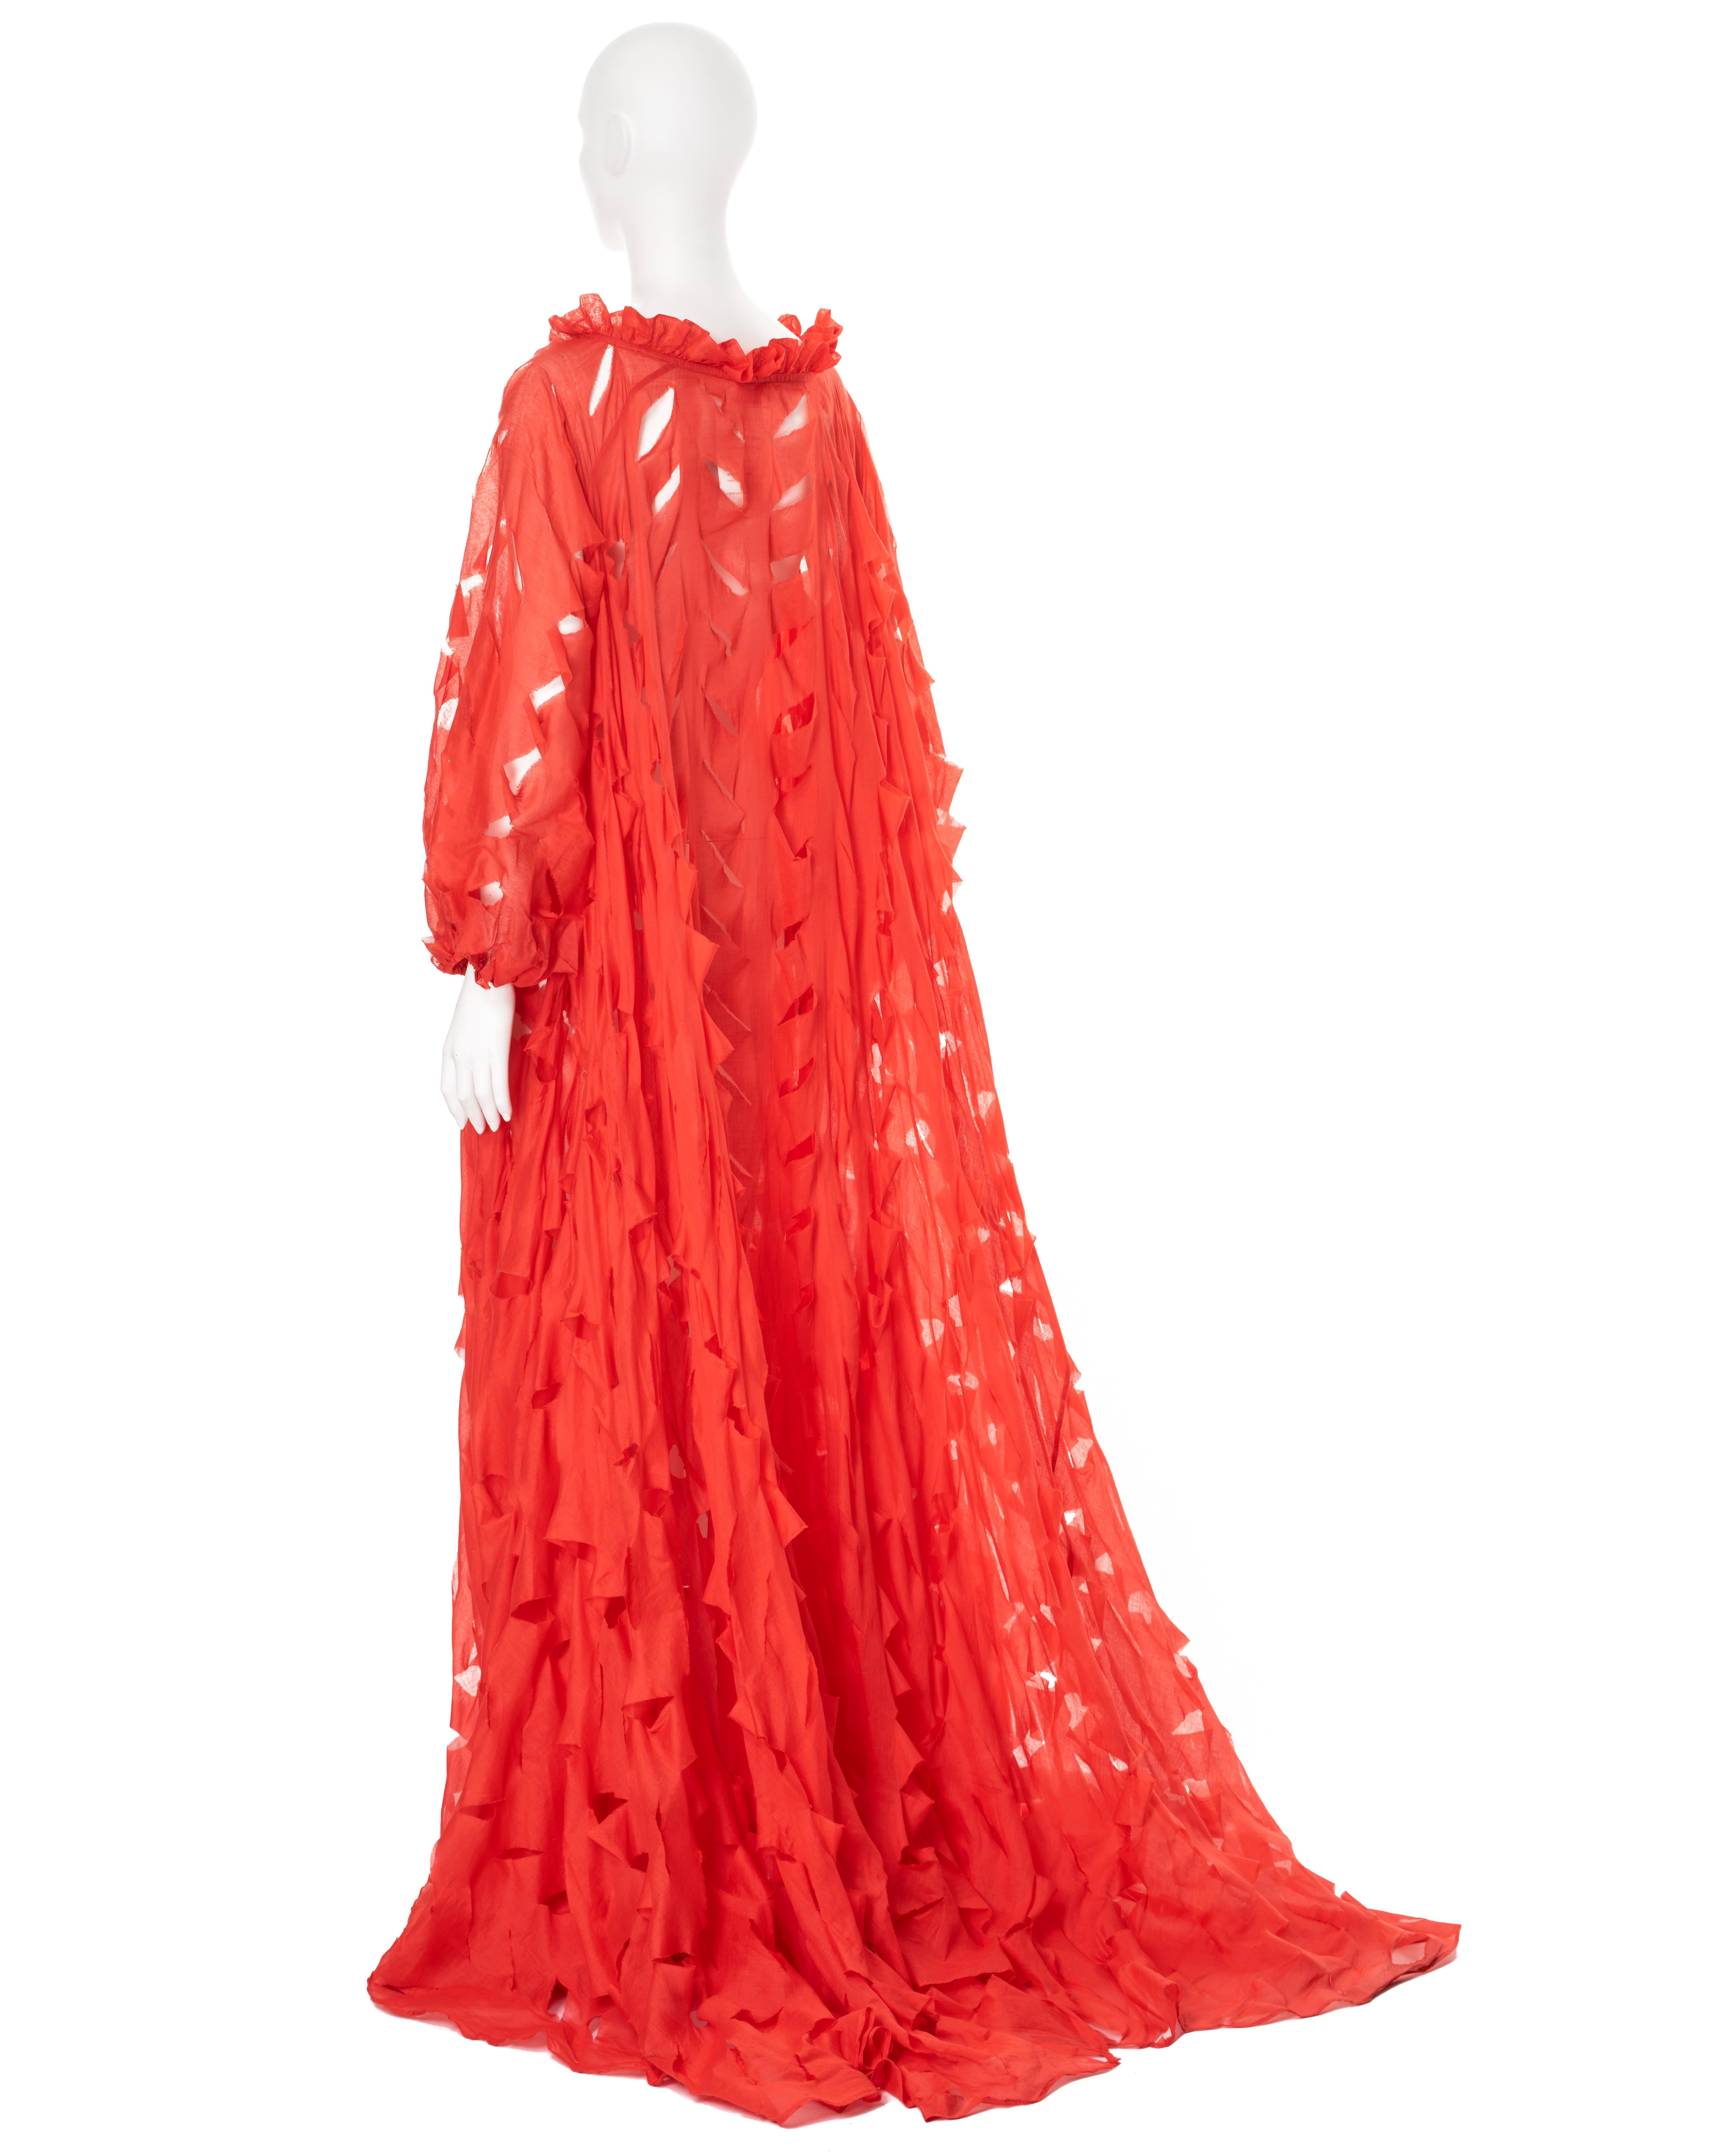 Vivienne Westwood hand-cut red cotton circle-cut dress, ss 1991 For Sale 5